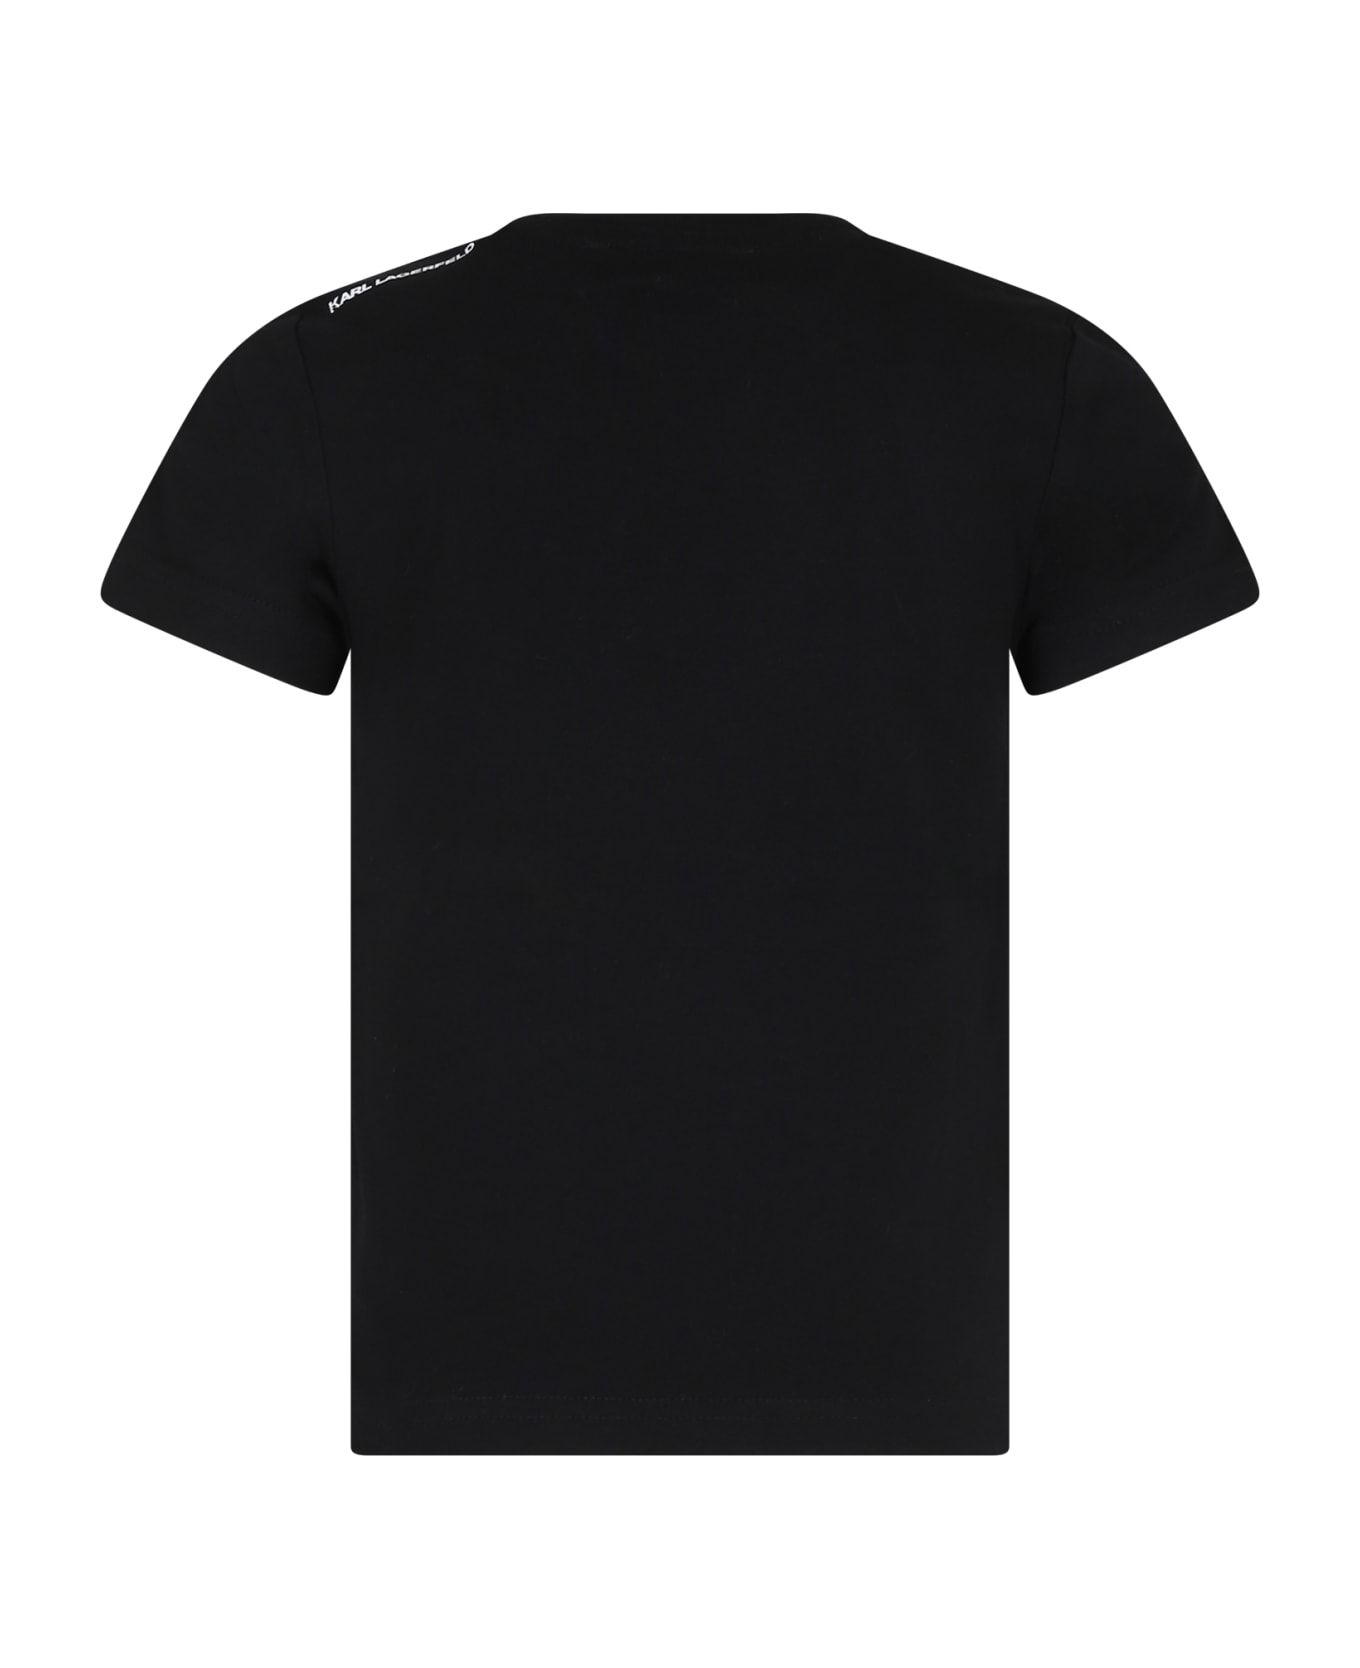 Karl Lagerfeld Kids Black T-shirt For Girl With Karl Print - Black